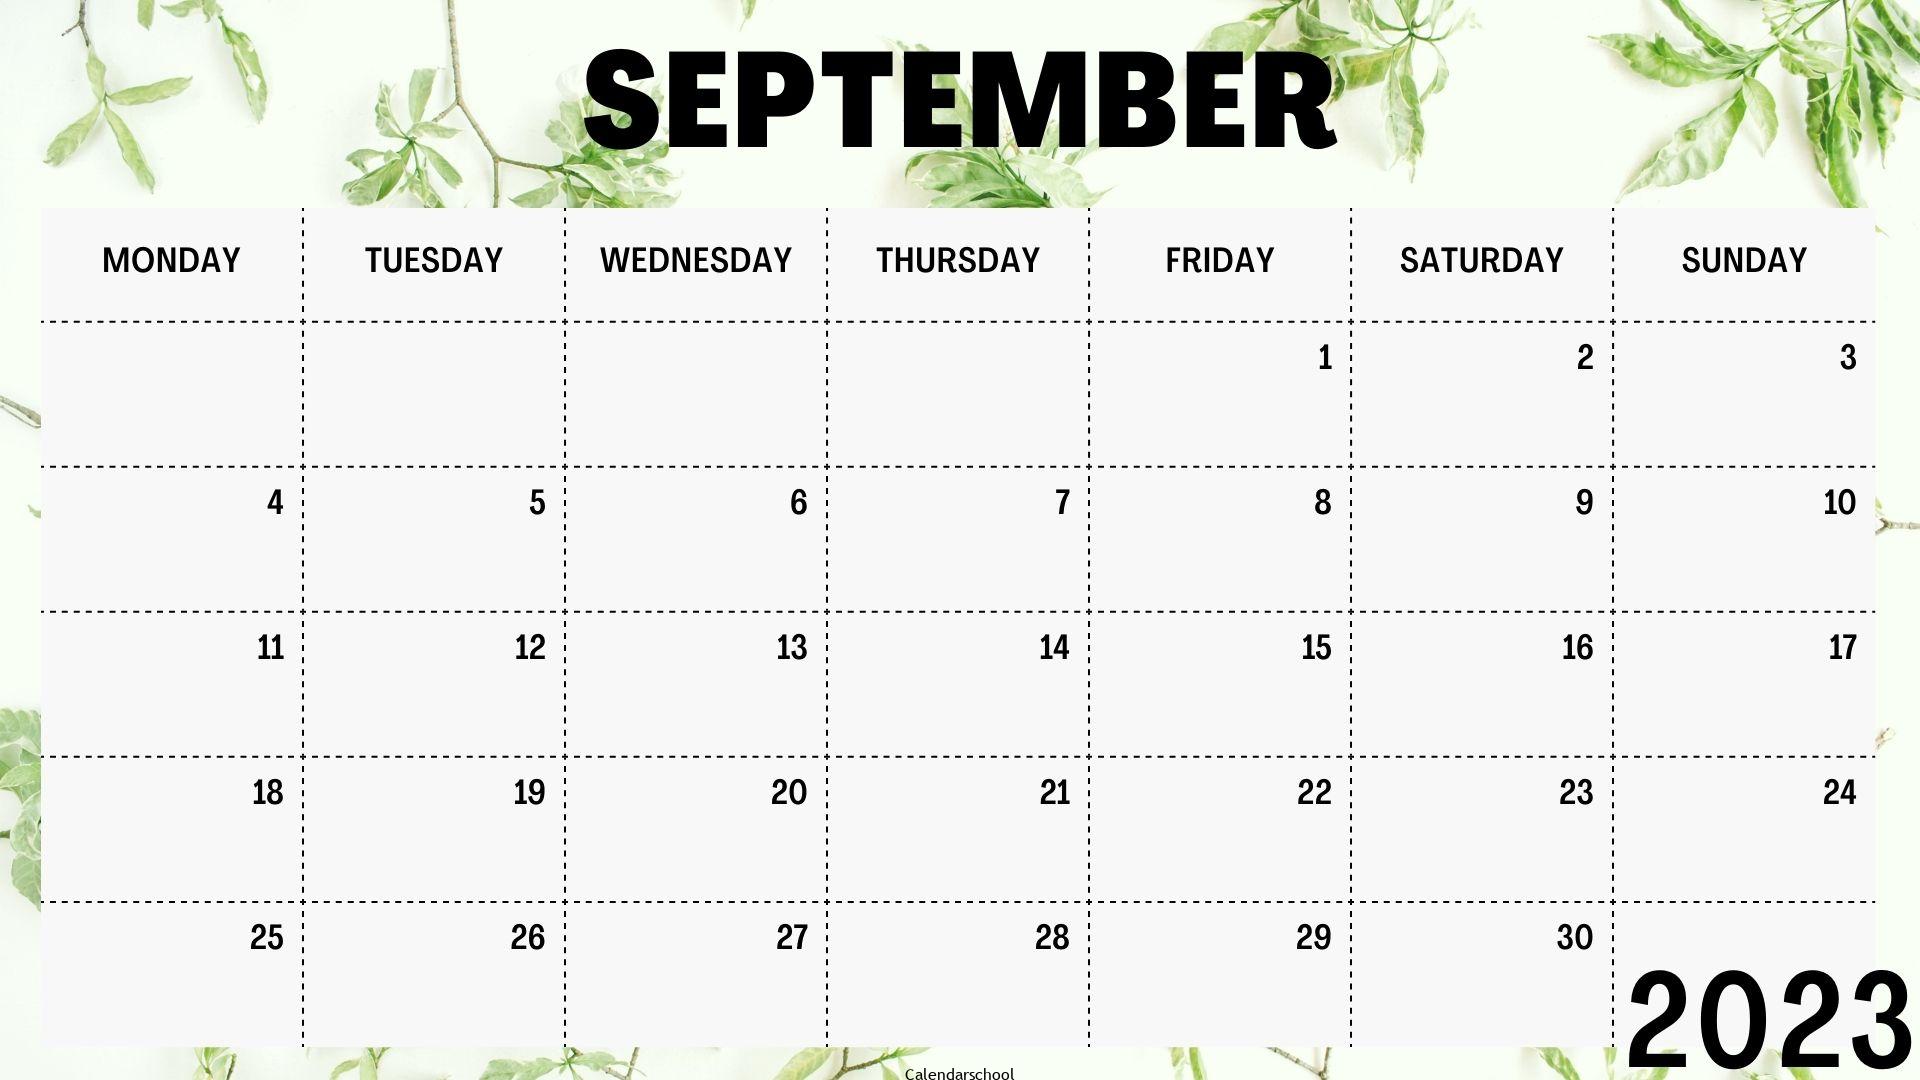 2023 September Calendar With Bank Holidays